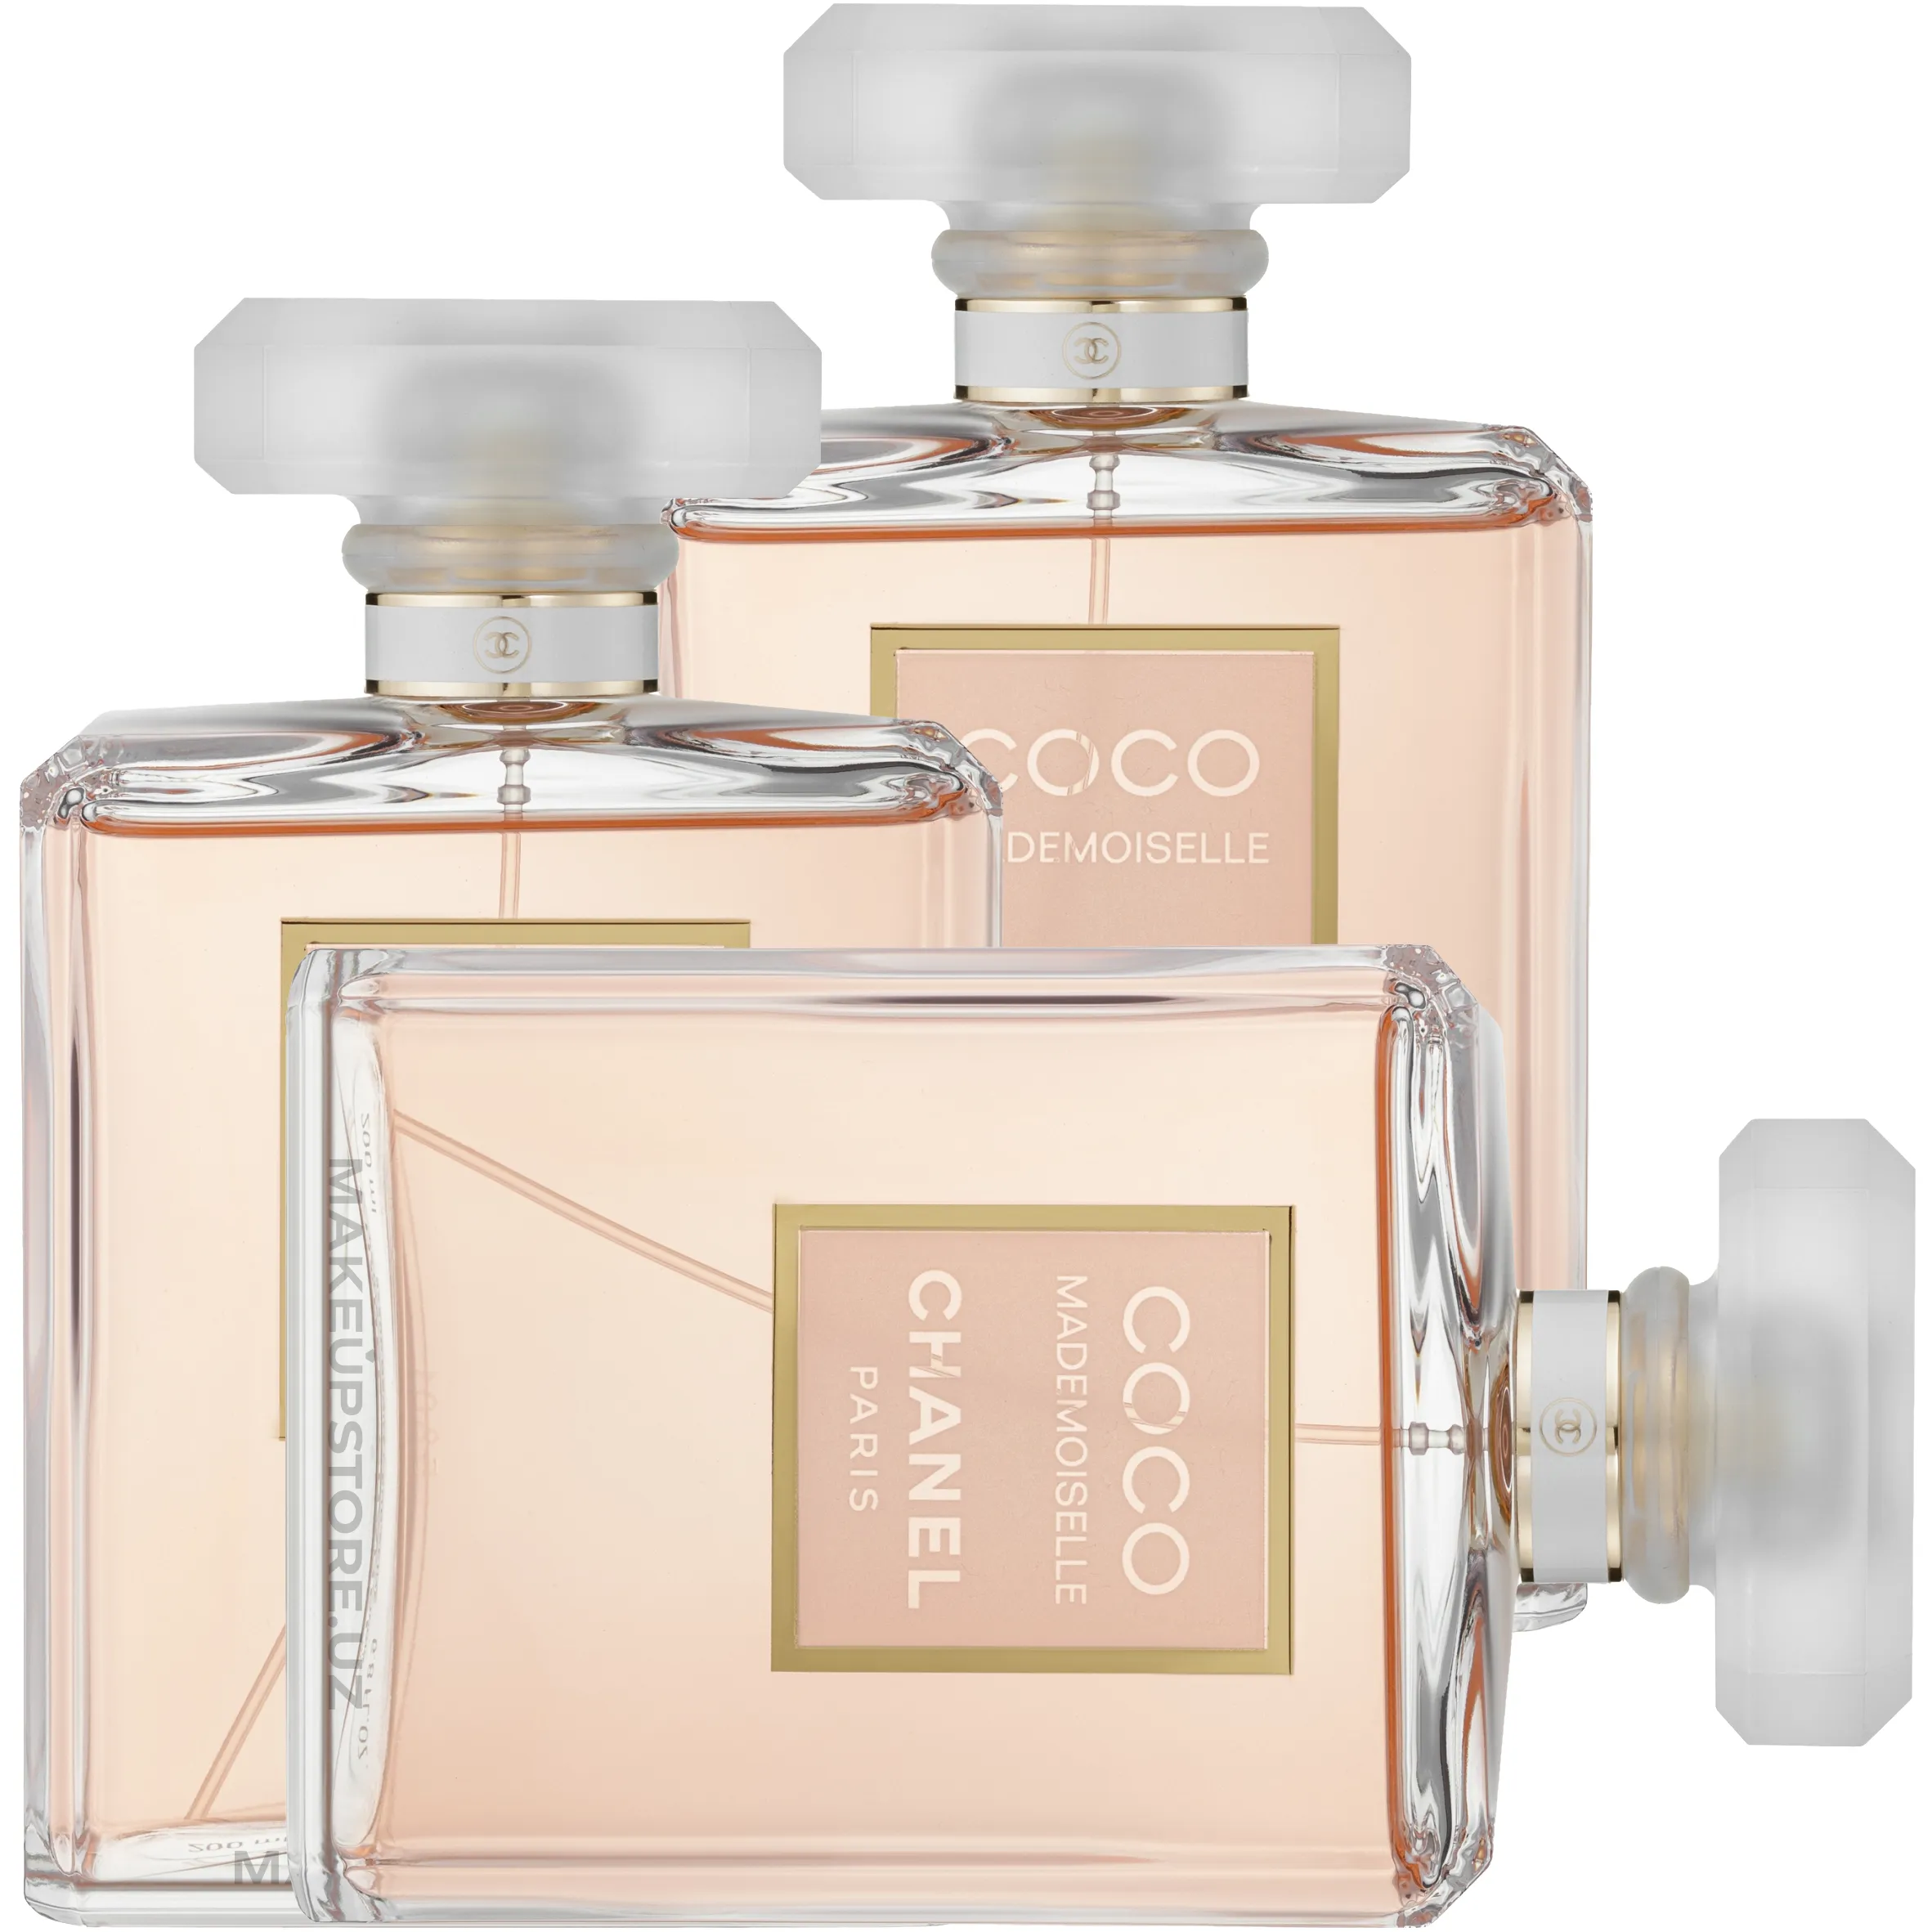 Free Coco Chanel Mademoiselle Perfume Sample